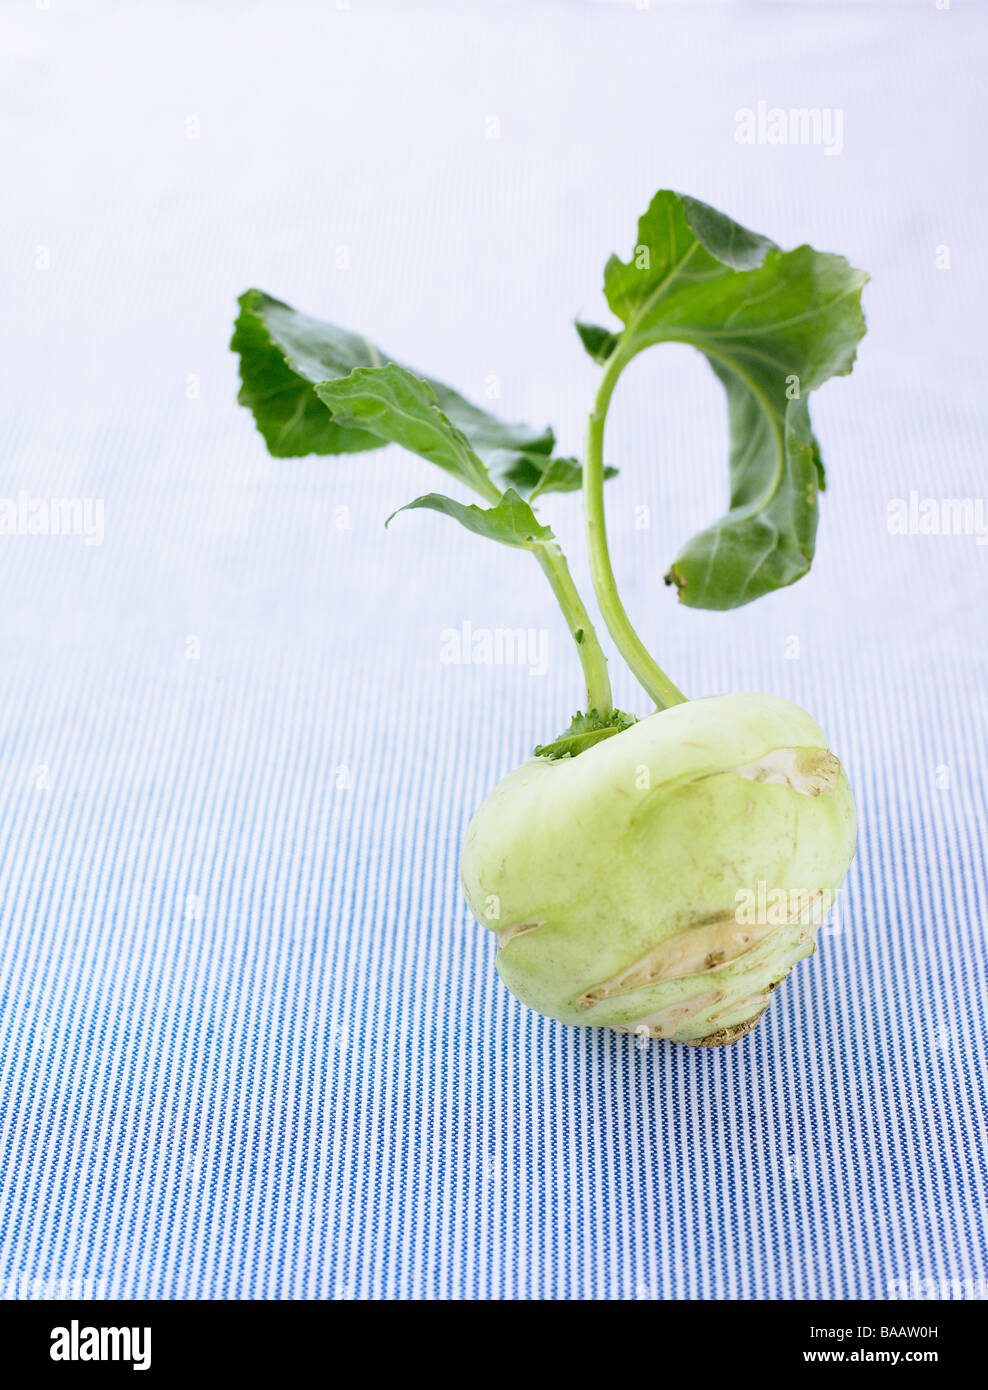 Turnip cabbage, close-up. Stock Photo